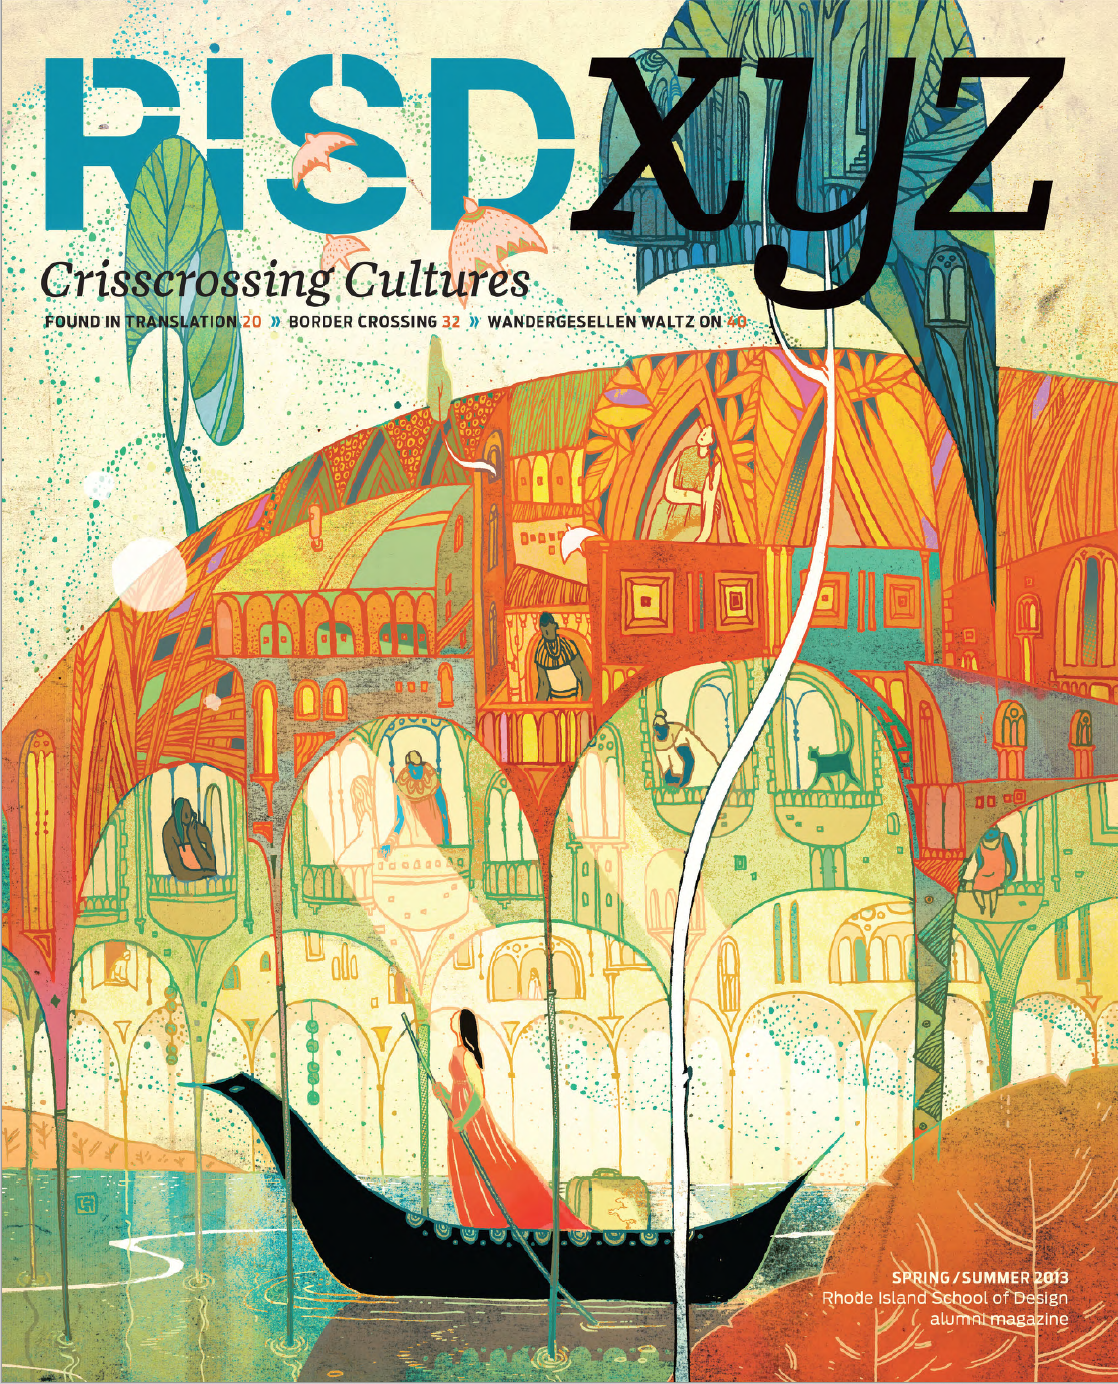 RISD XYZ Spring/Summer 2013: Crisscrossing Cultures